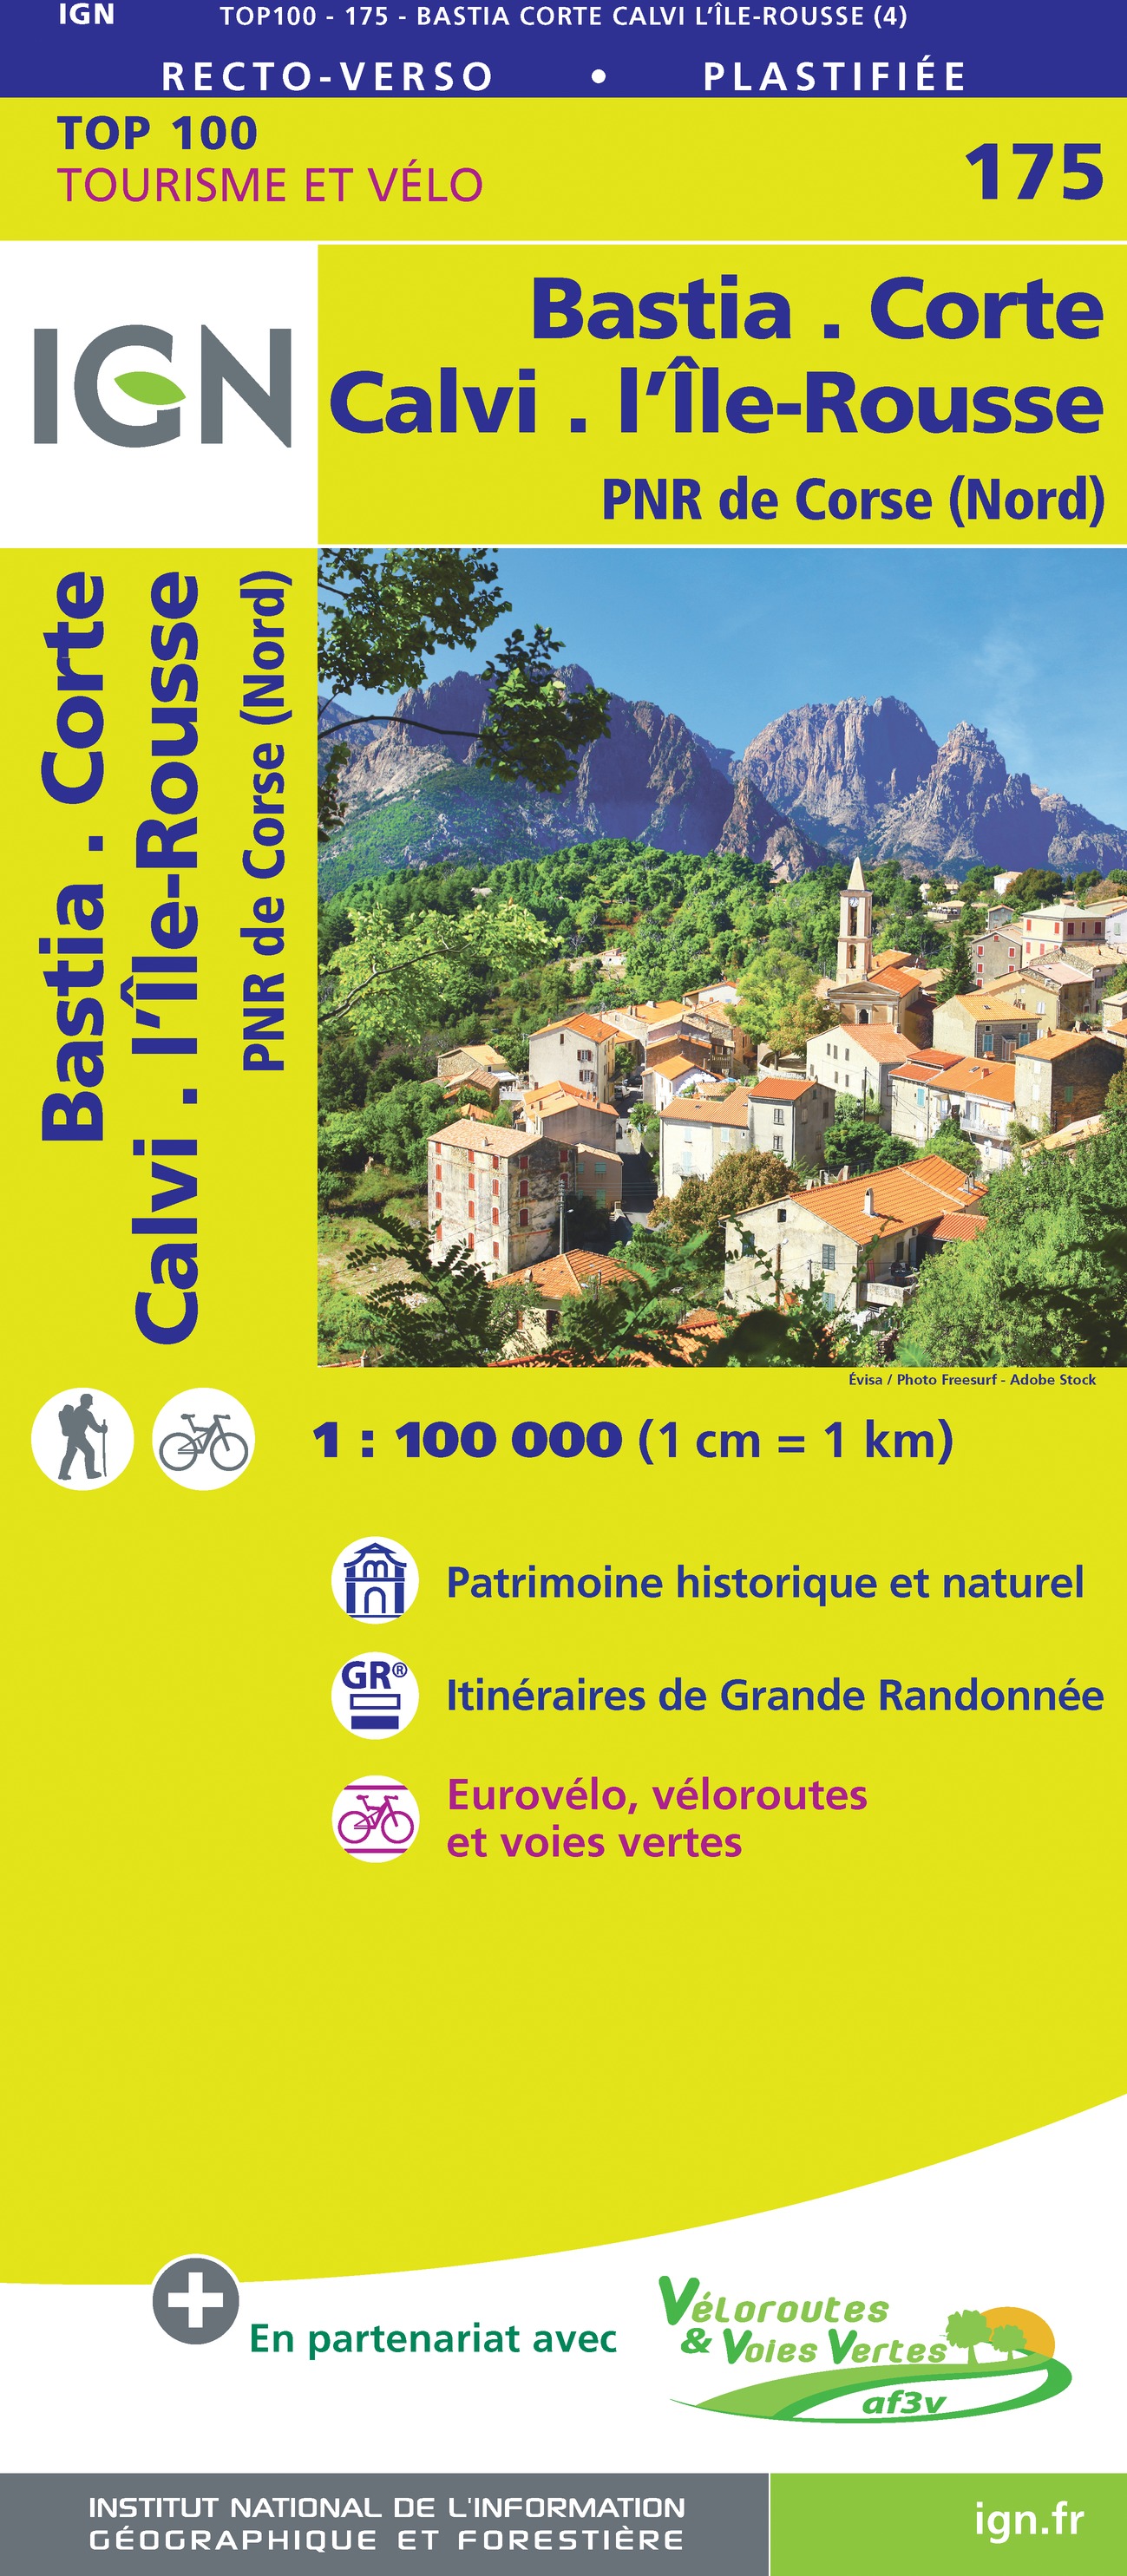 Fietskaart - Wegenkaart - landkaart 175 Bastia - Corte - Calvi - Ile-Rousse | IGN - Institut Géographique National de zwerver